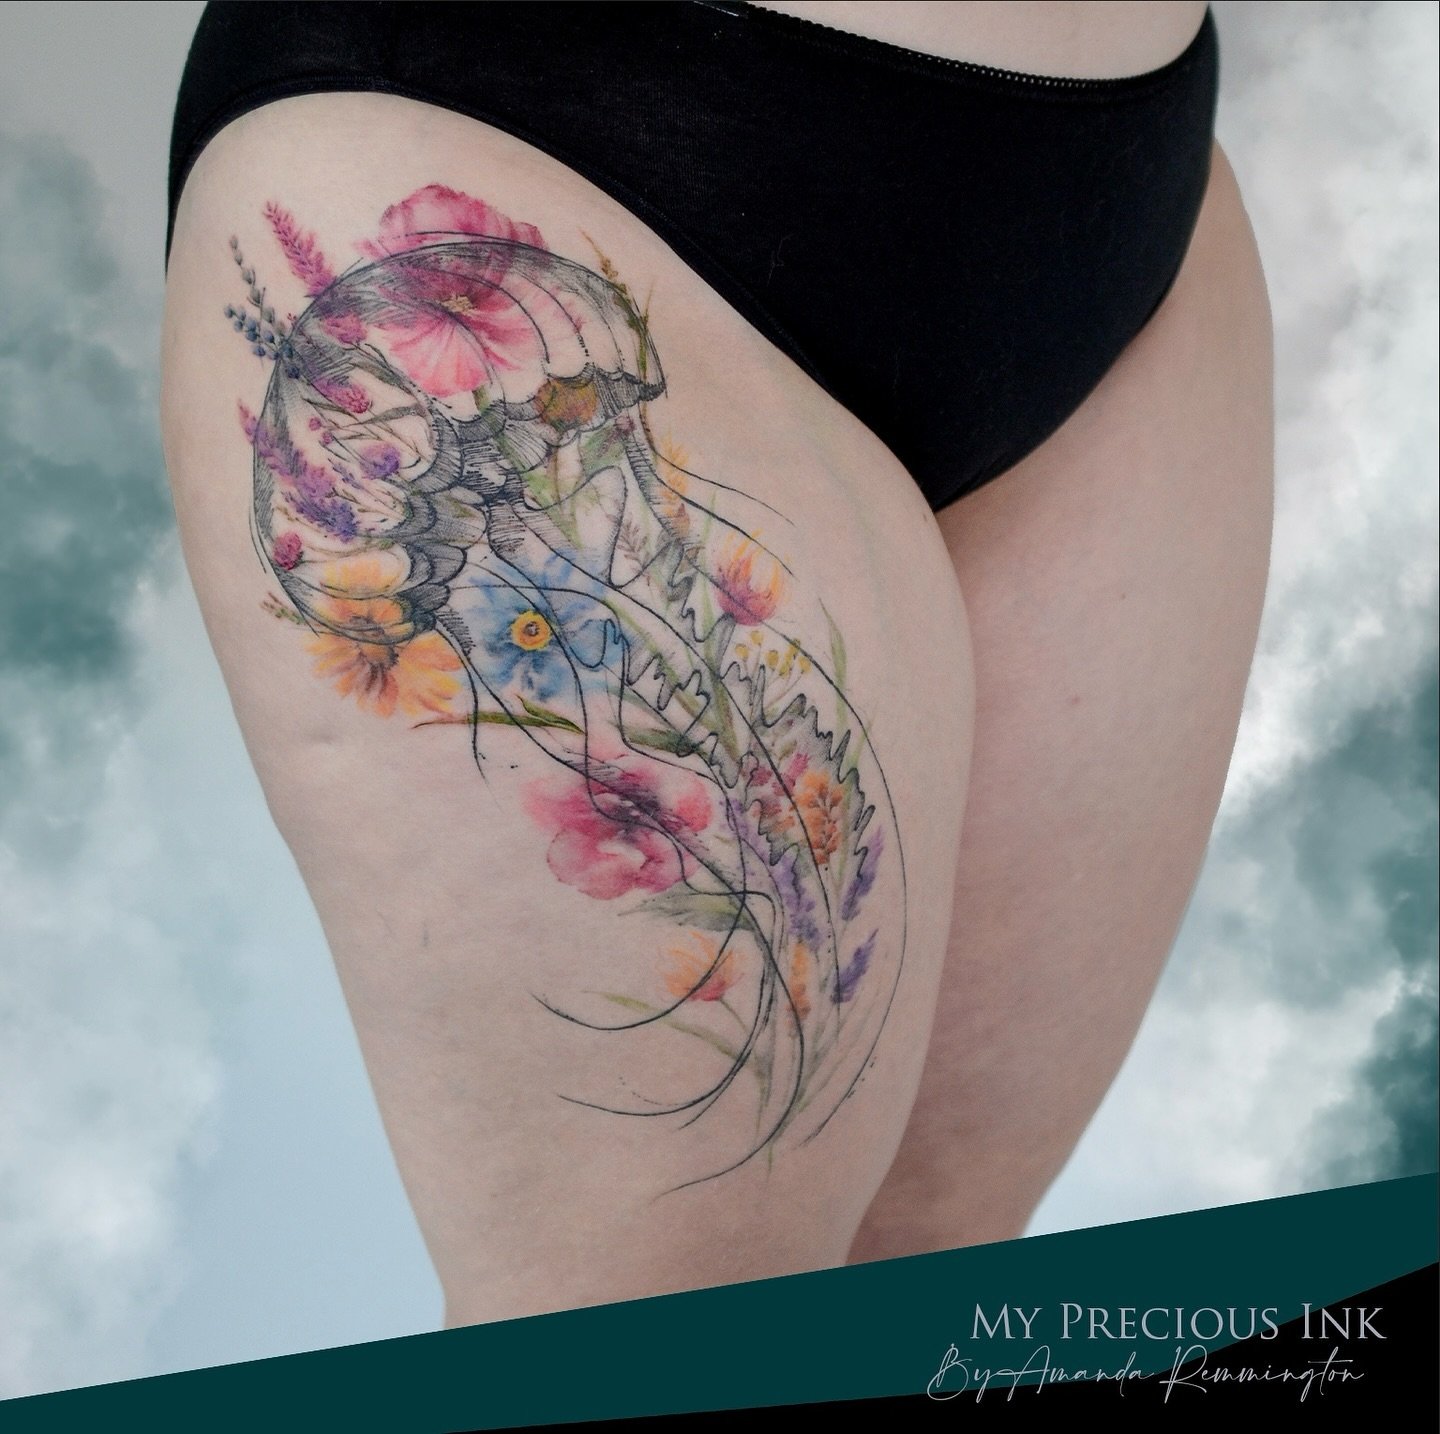 Freehand jellyfish with watercolor florals.
///&mdash;&mdash;&gt; www.mypreciousink.nl &lt;&mdash;&mdash;\\\

#tattoolifecommunity #watercolortattoos  #watercolortattoostyle #watercolortattooartist #abstracttattoo #tattoostagrams #dutchtattooartist #